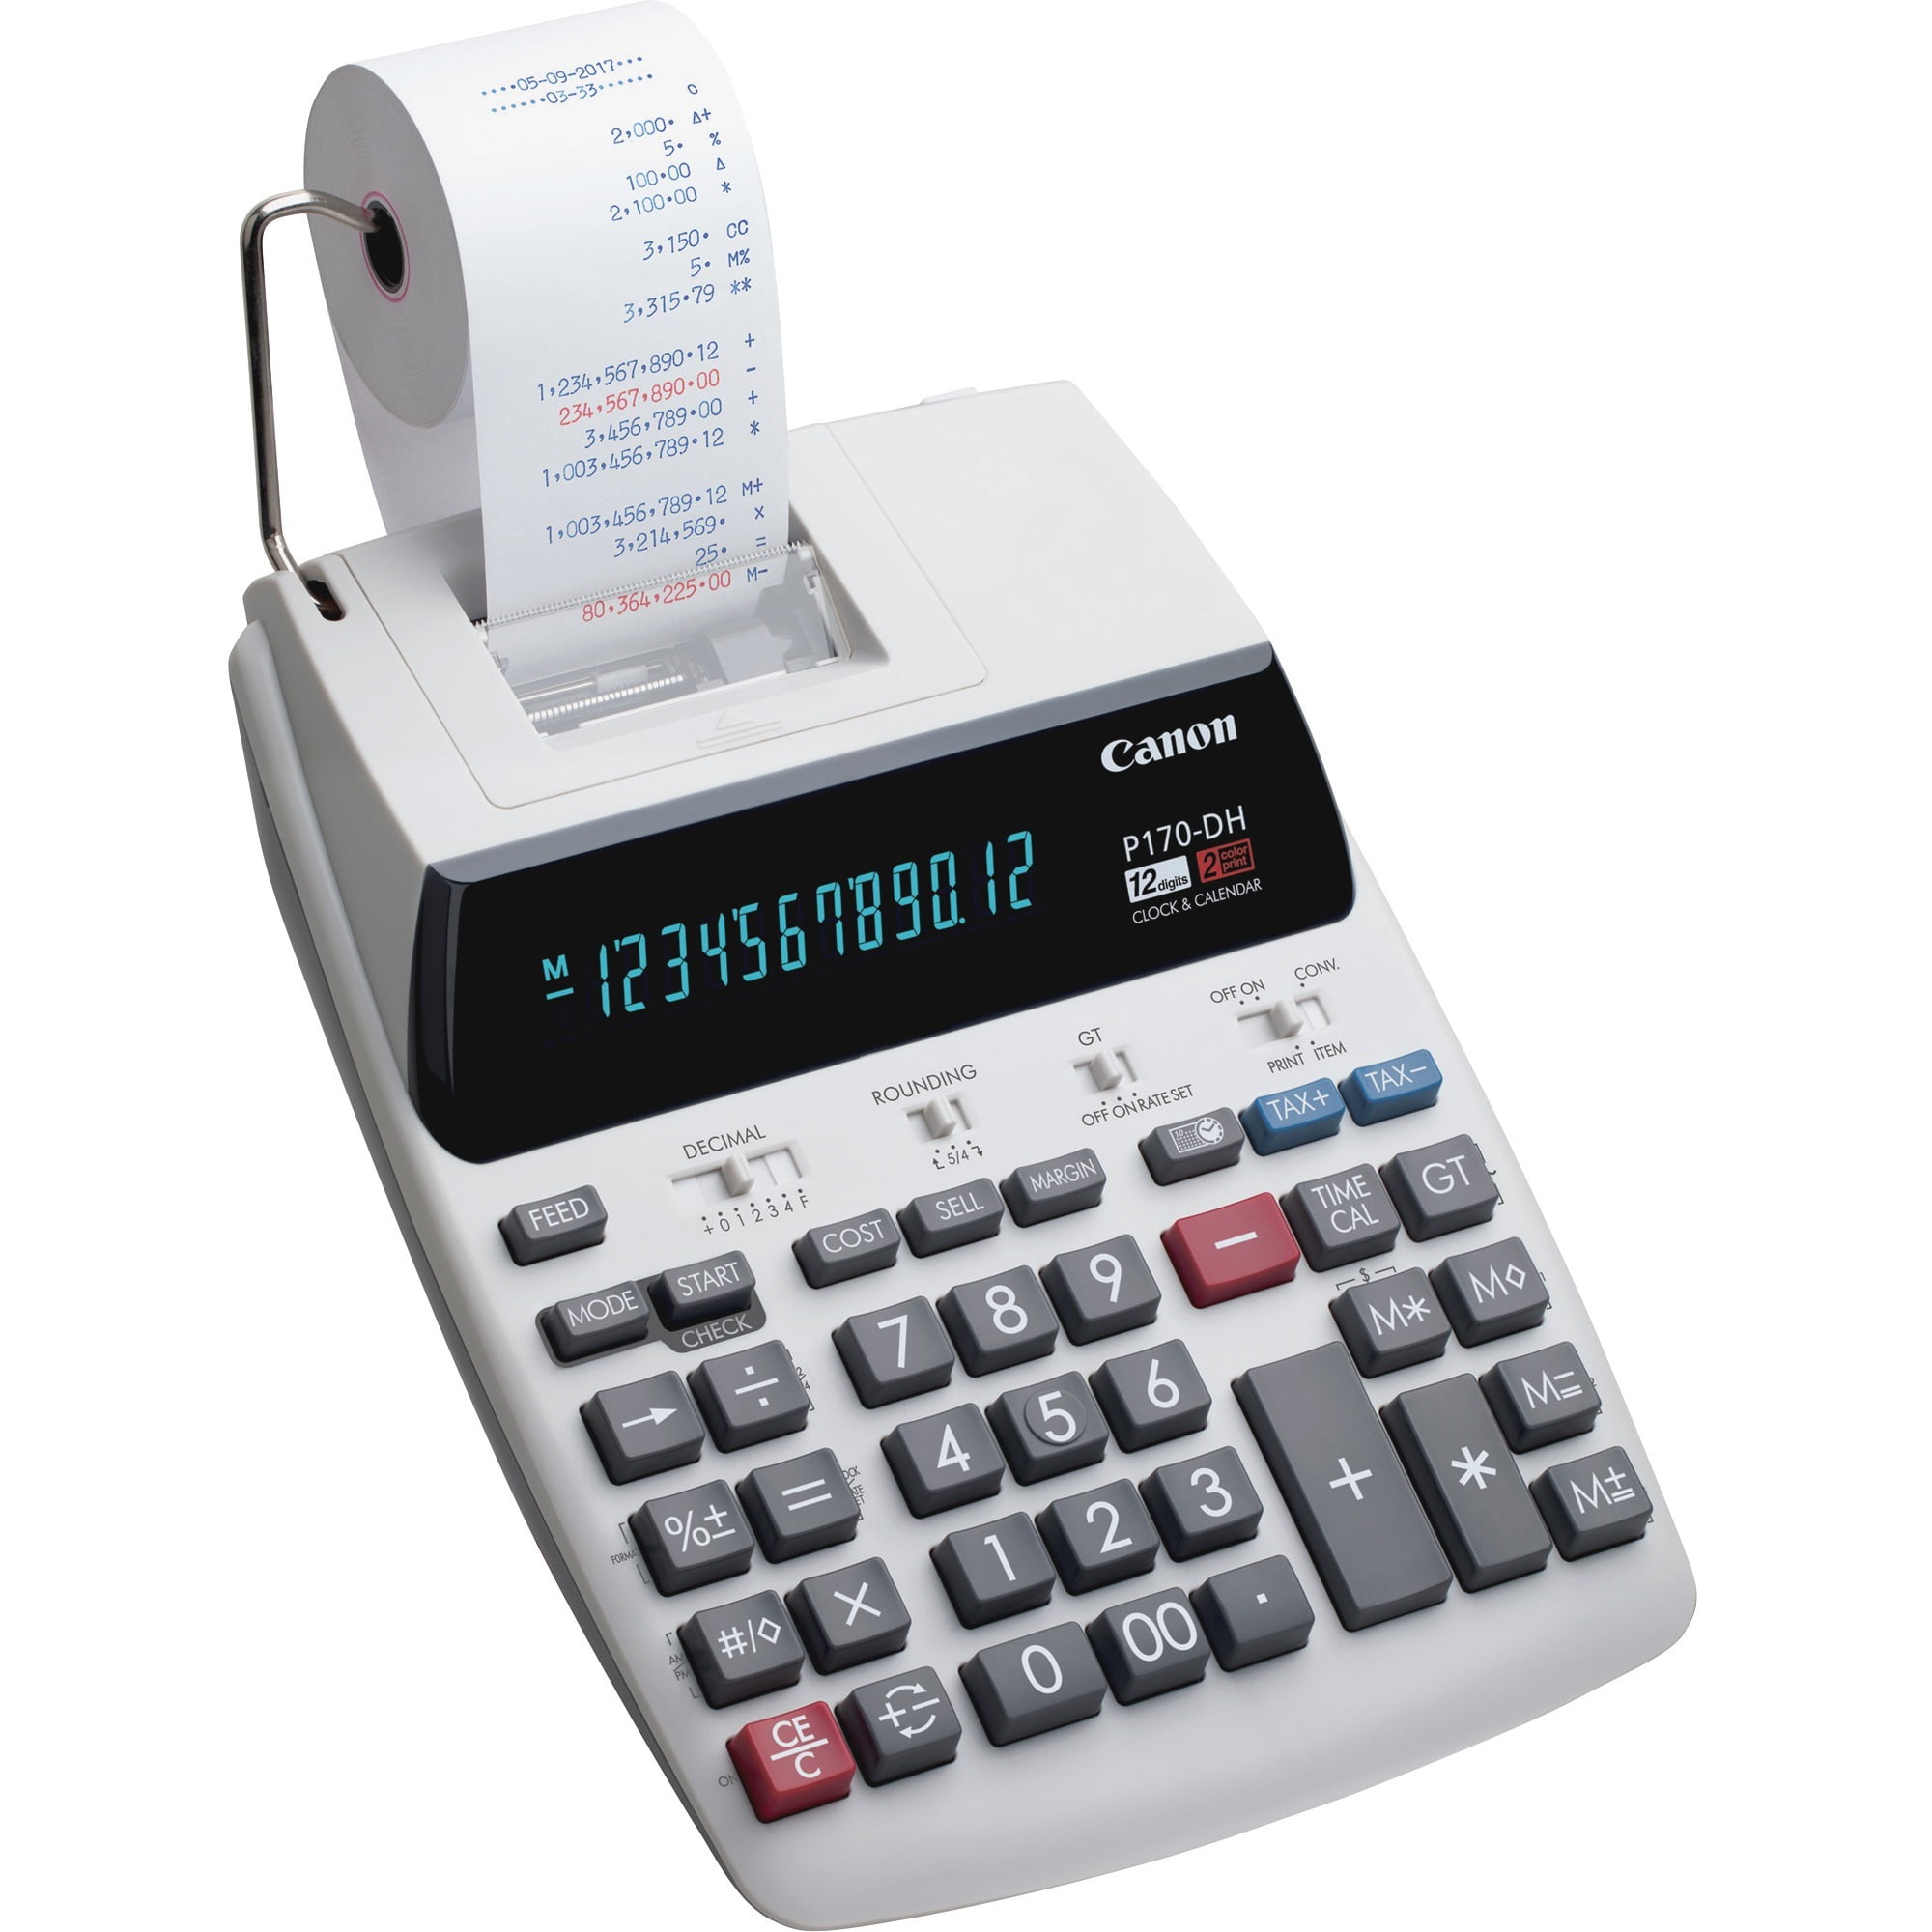 Sharp VX-2652H Scientific Calculator for sale online 